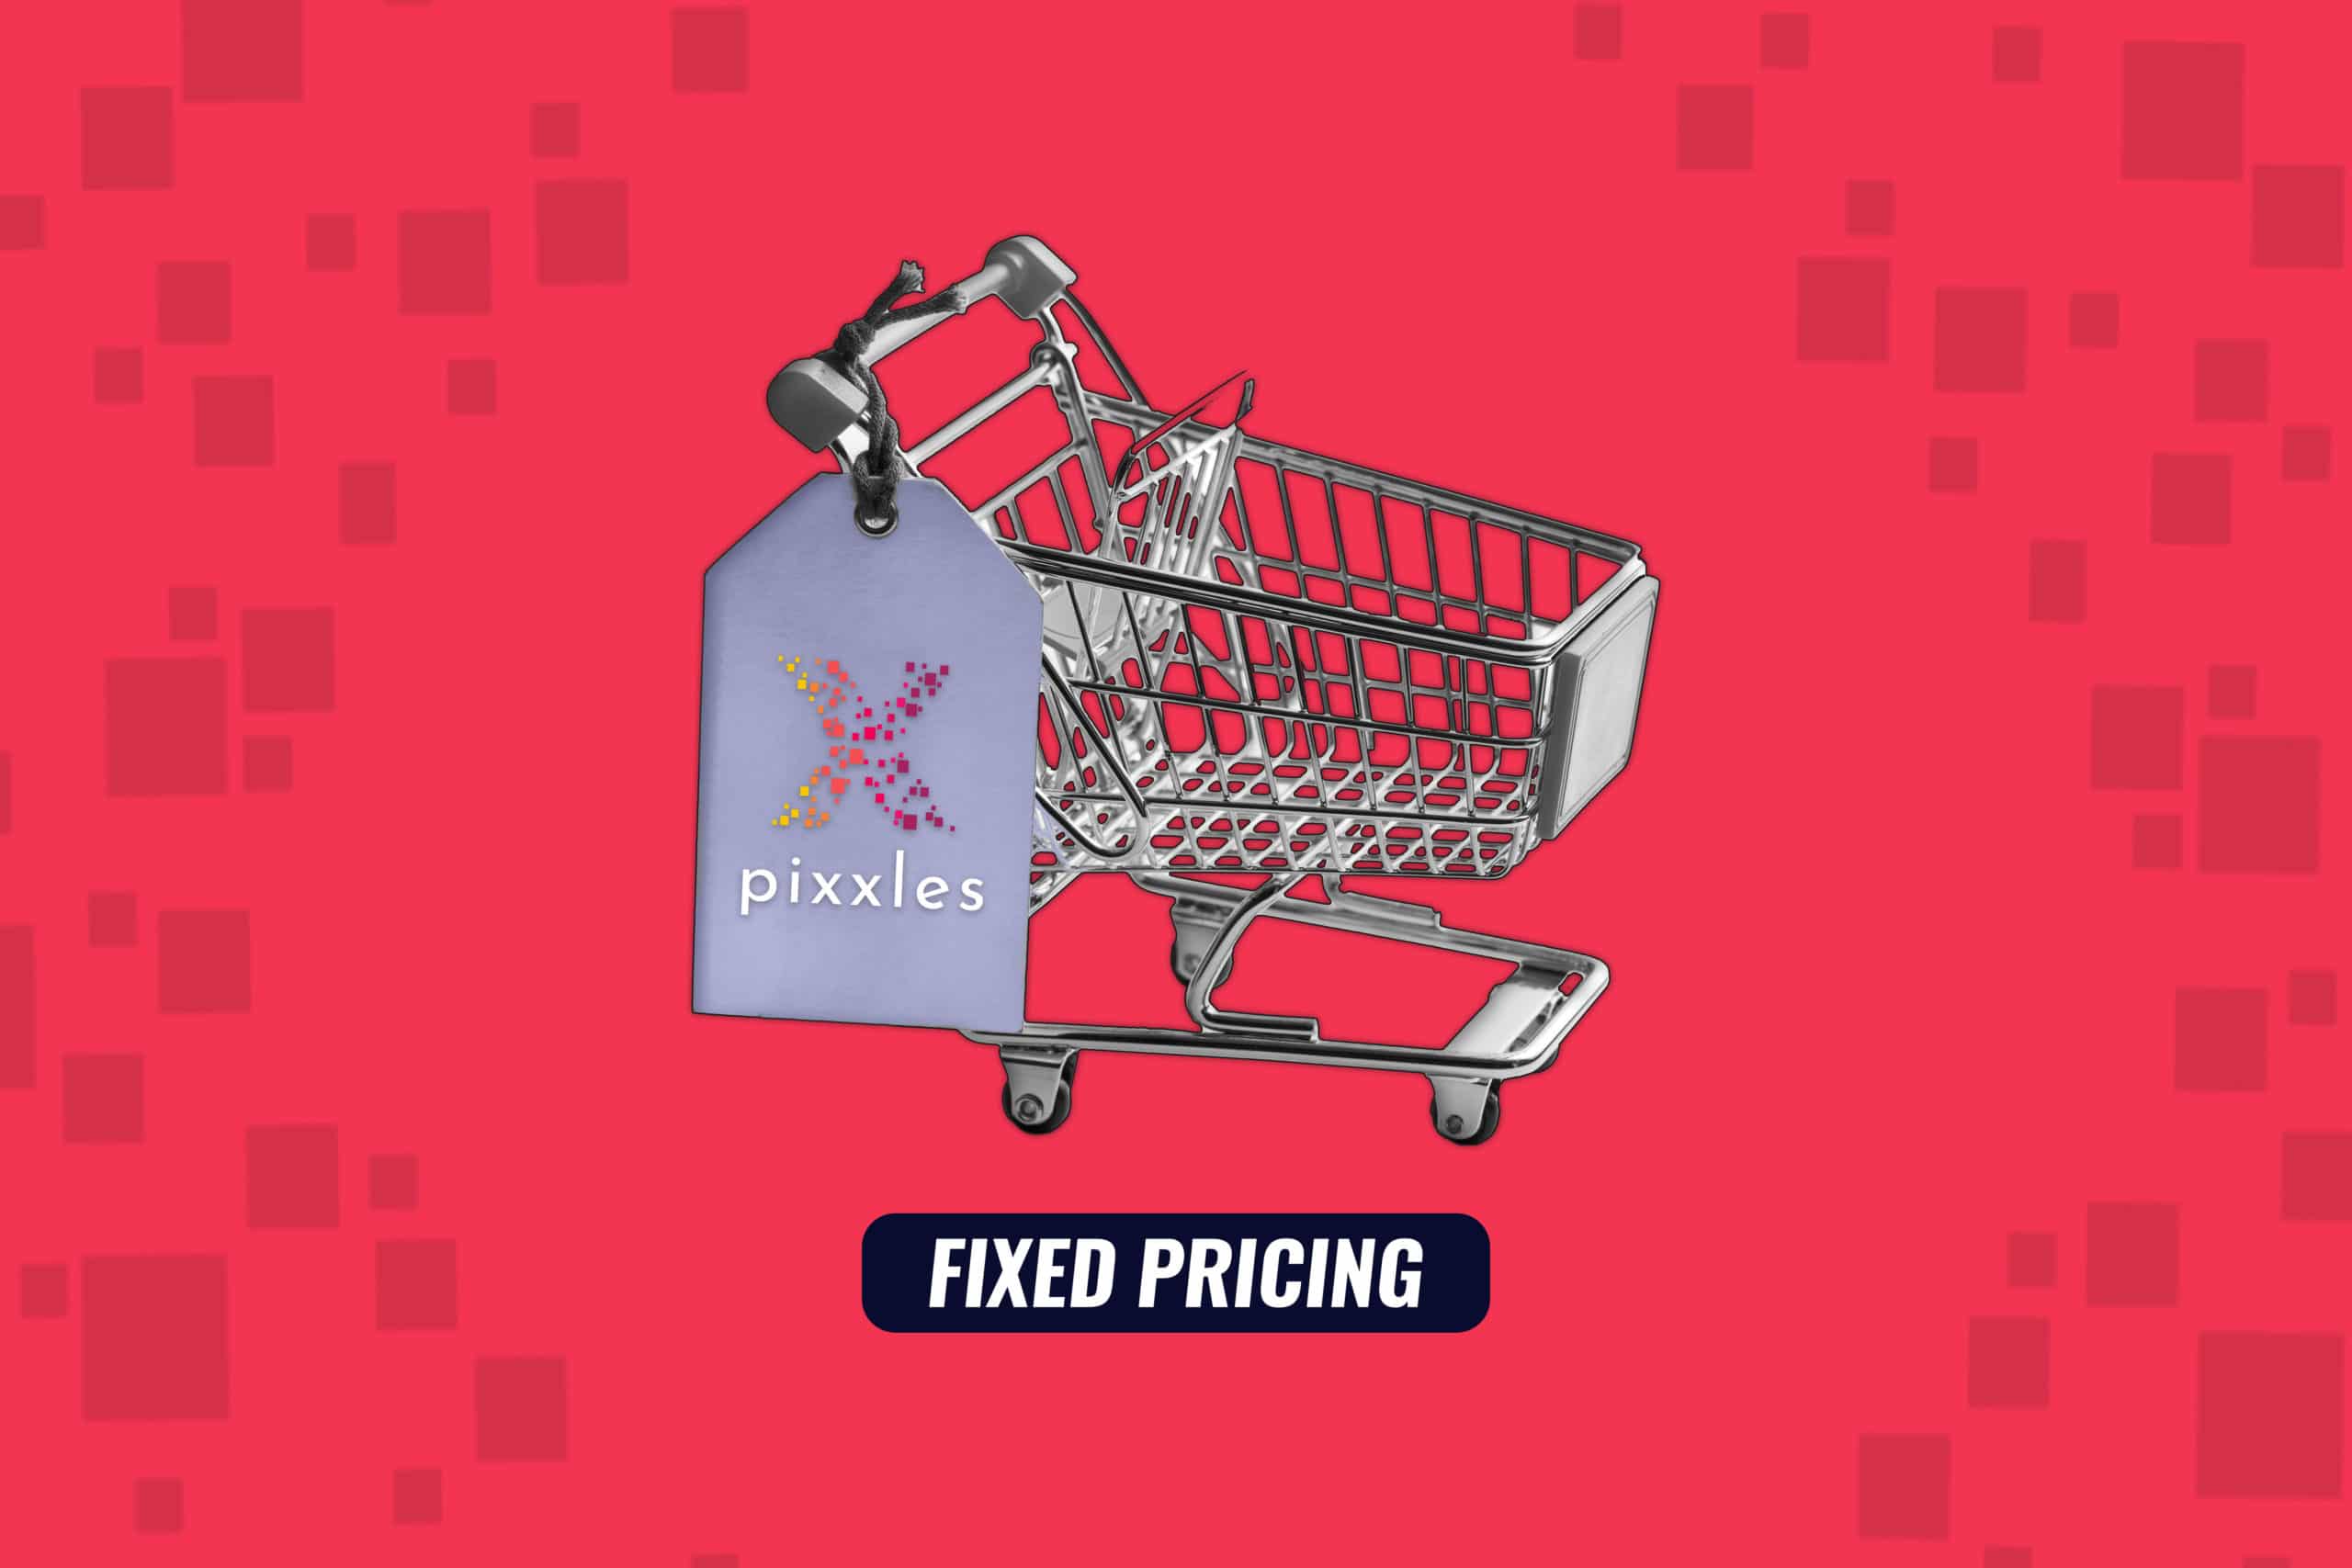 Pixxles Merchant Fixed Pricing